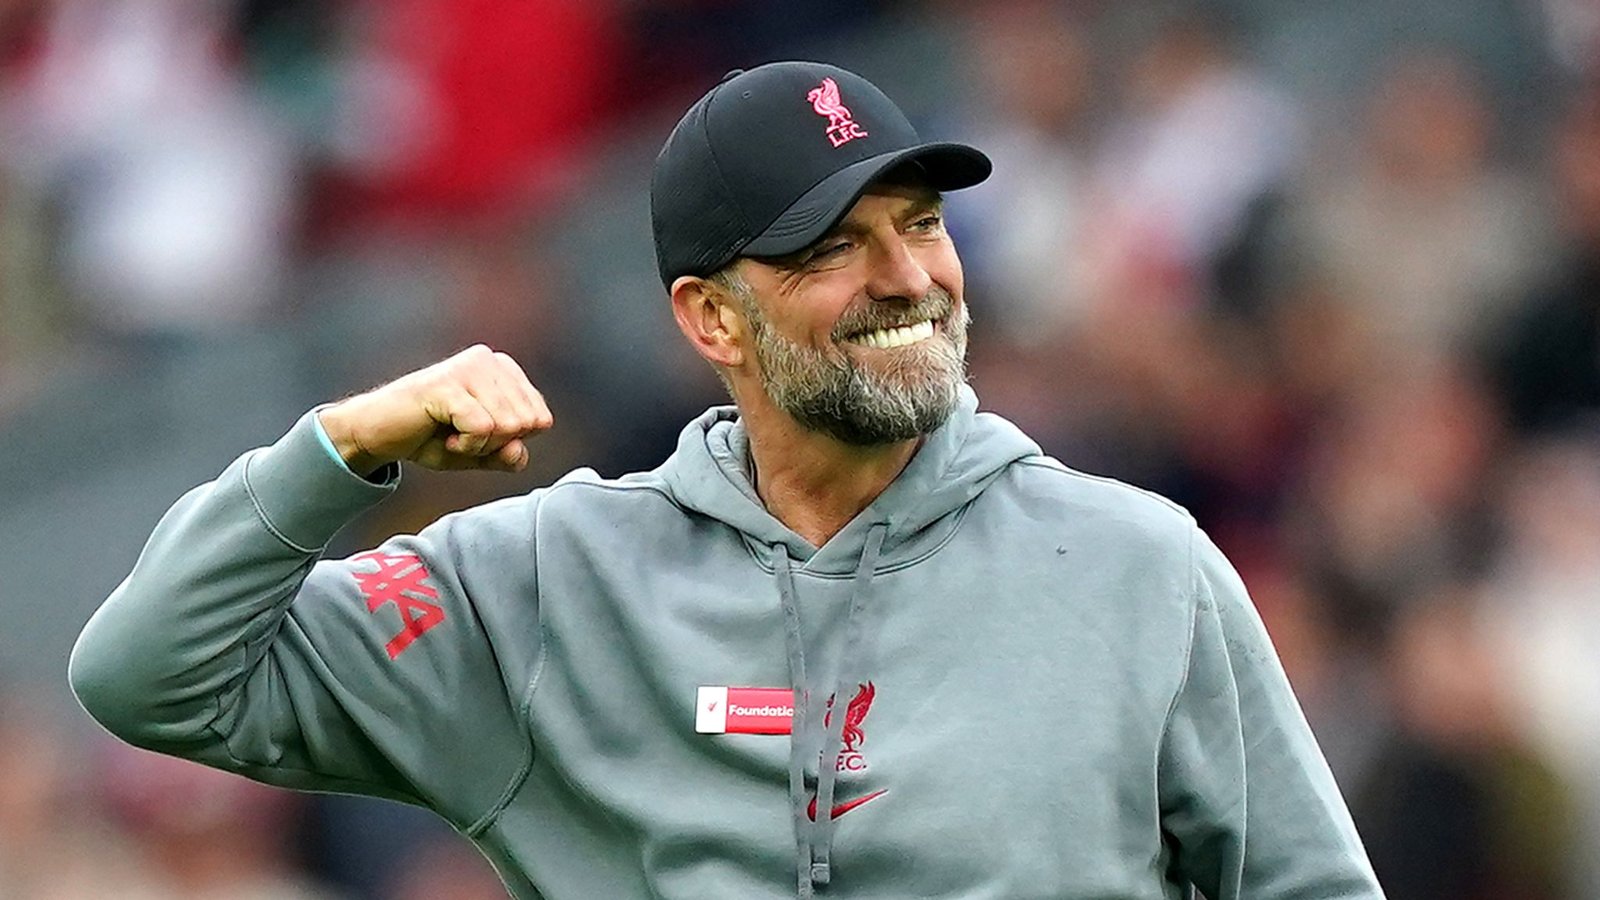 Jurgen Klopp turned down Germany head coach job to stay at Liverpool